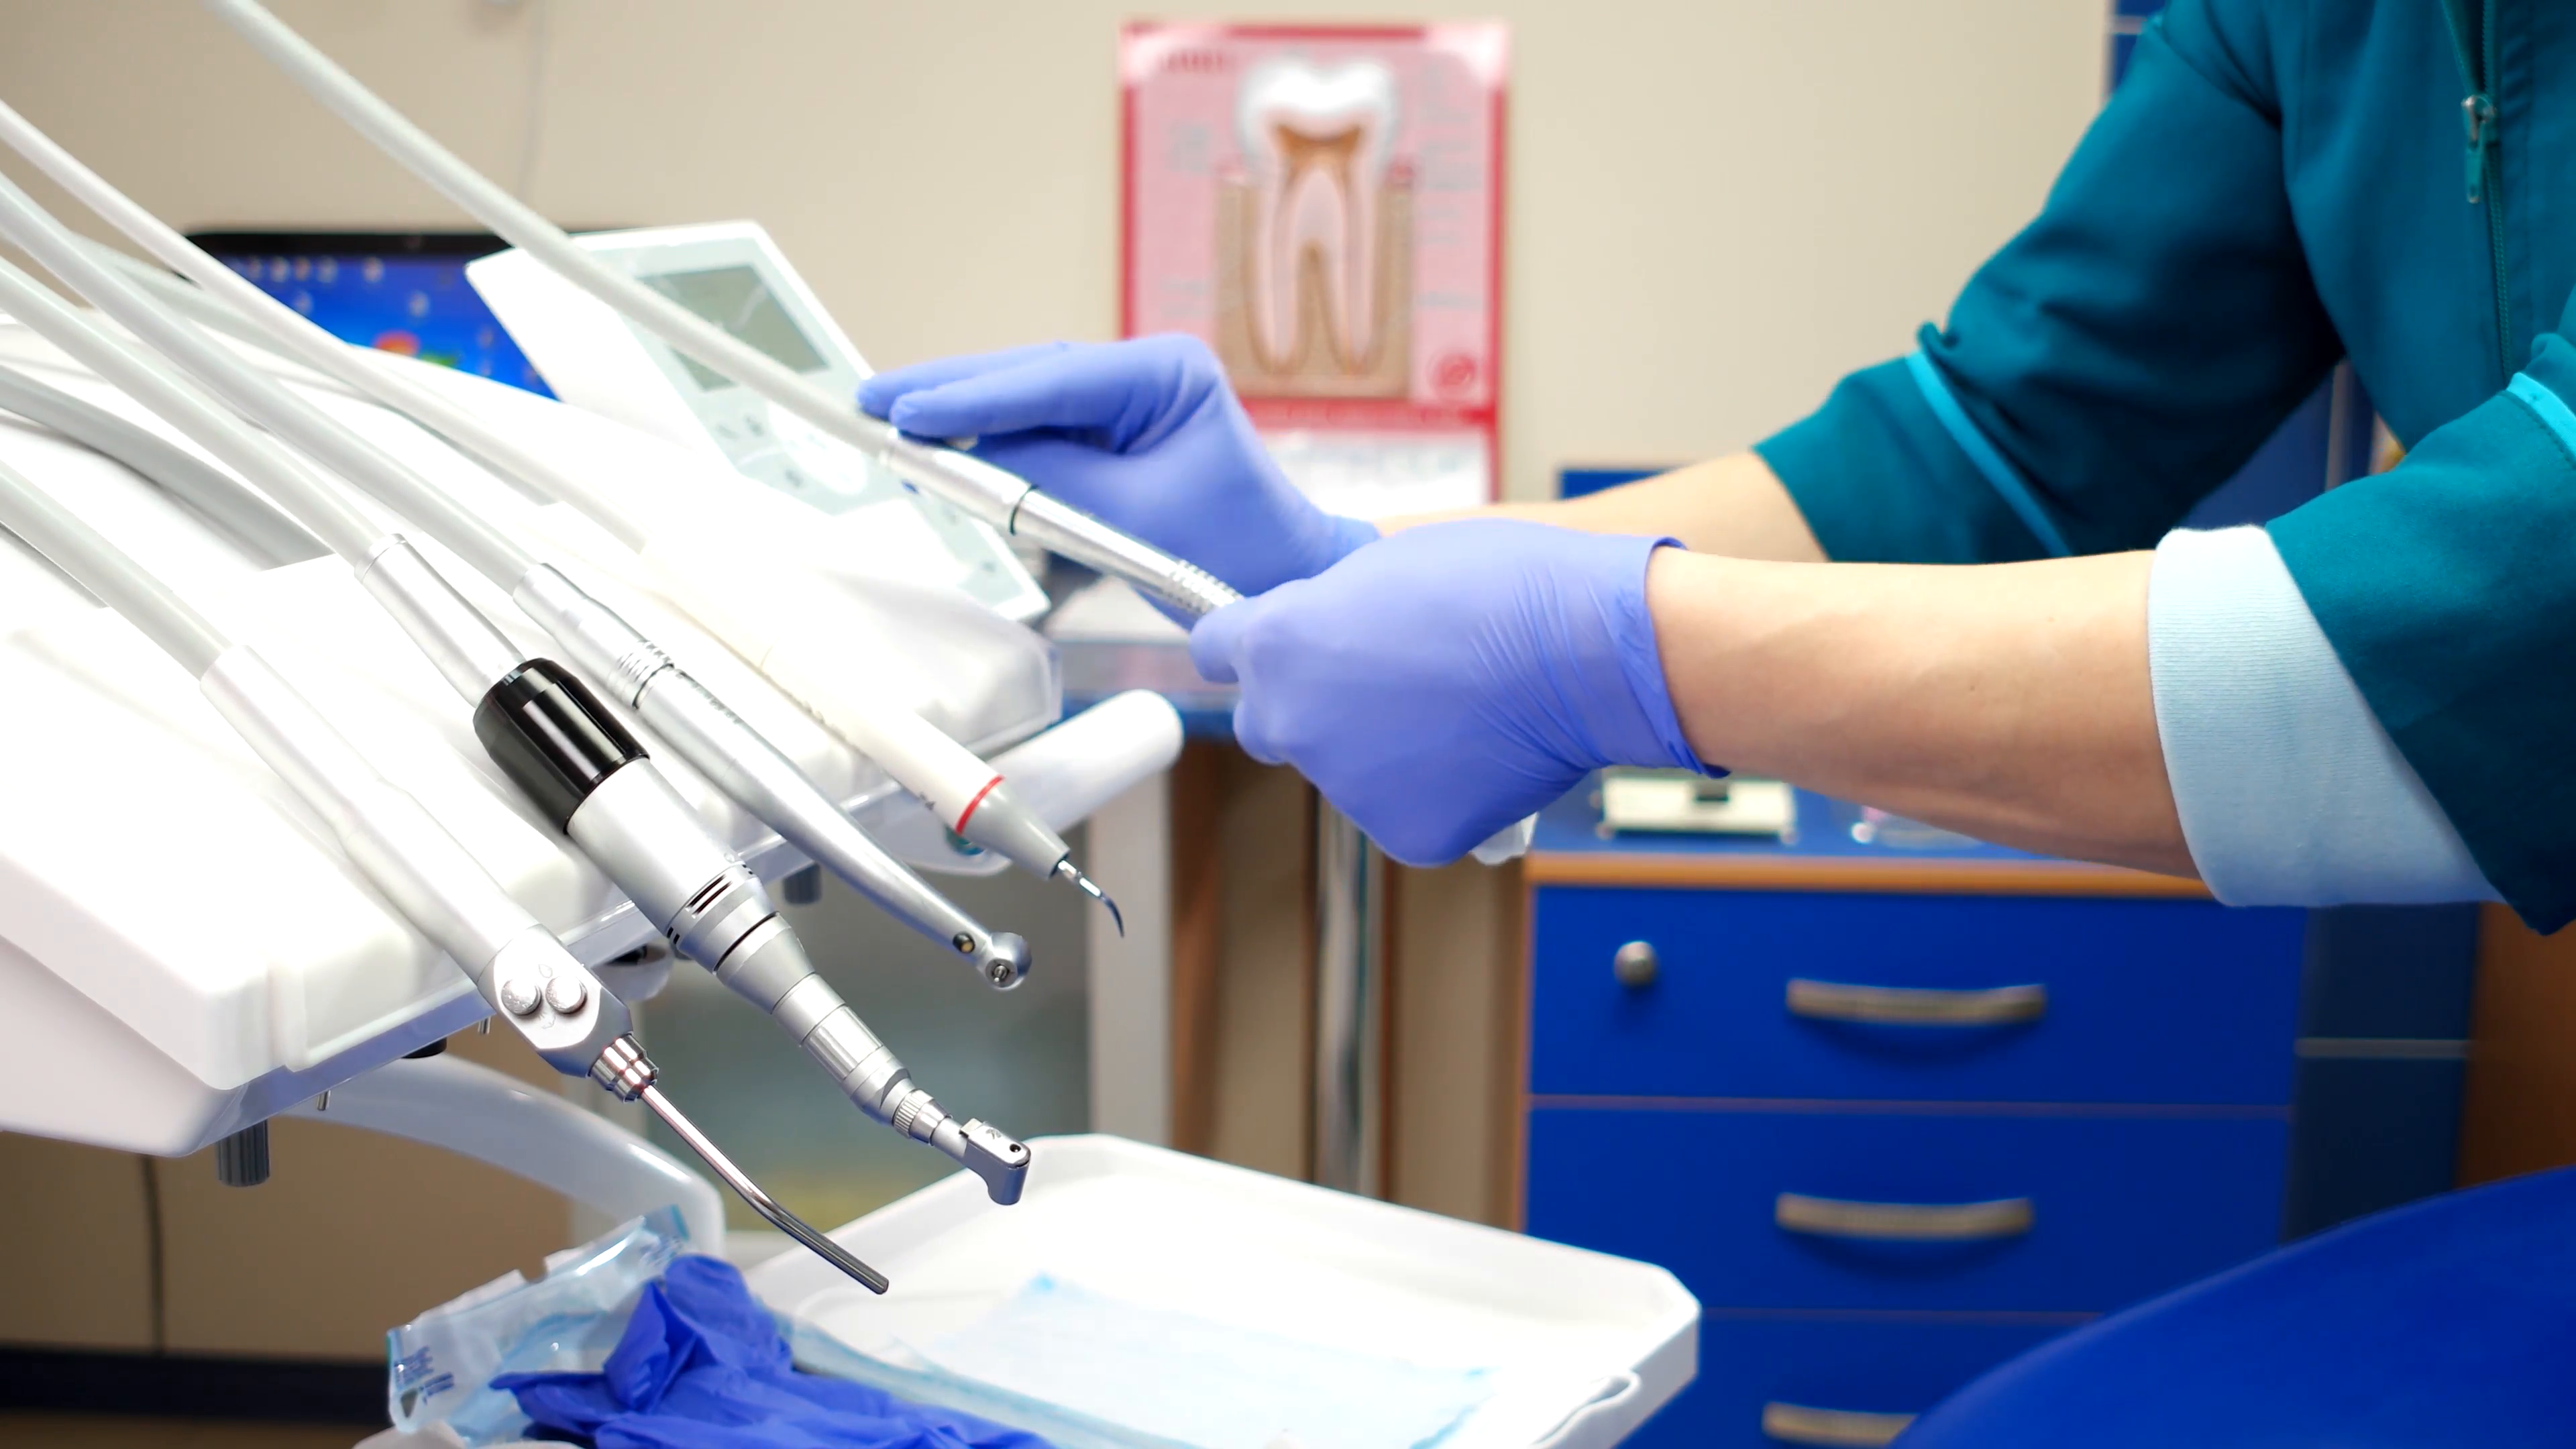 Nurse doctor dental assistant cleans medical instruments before ...